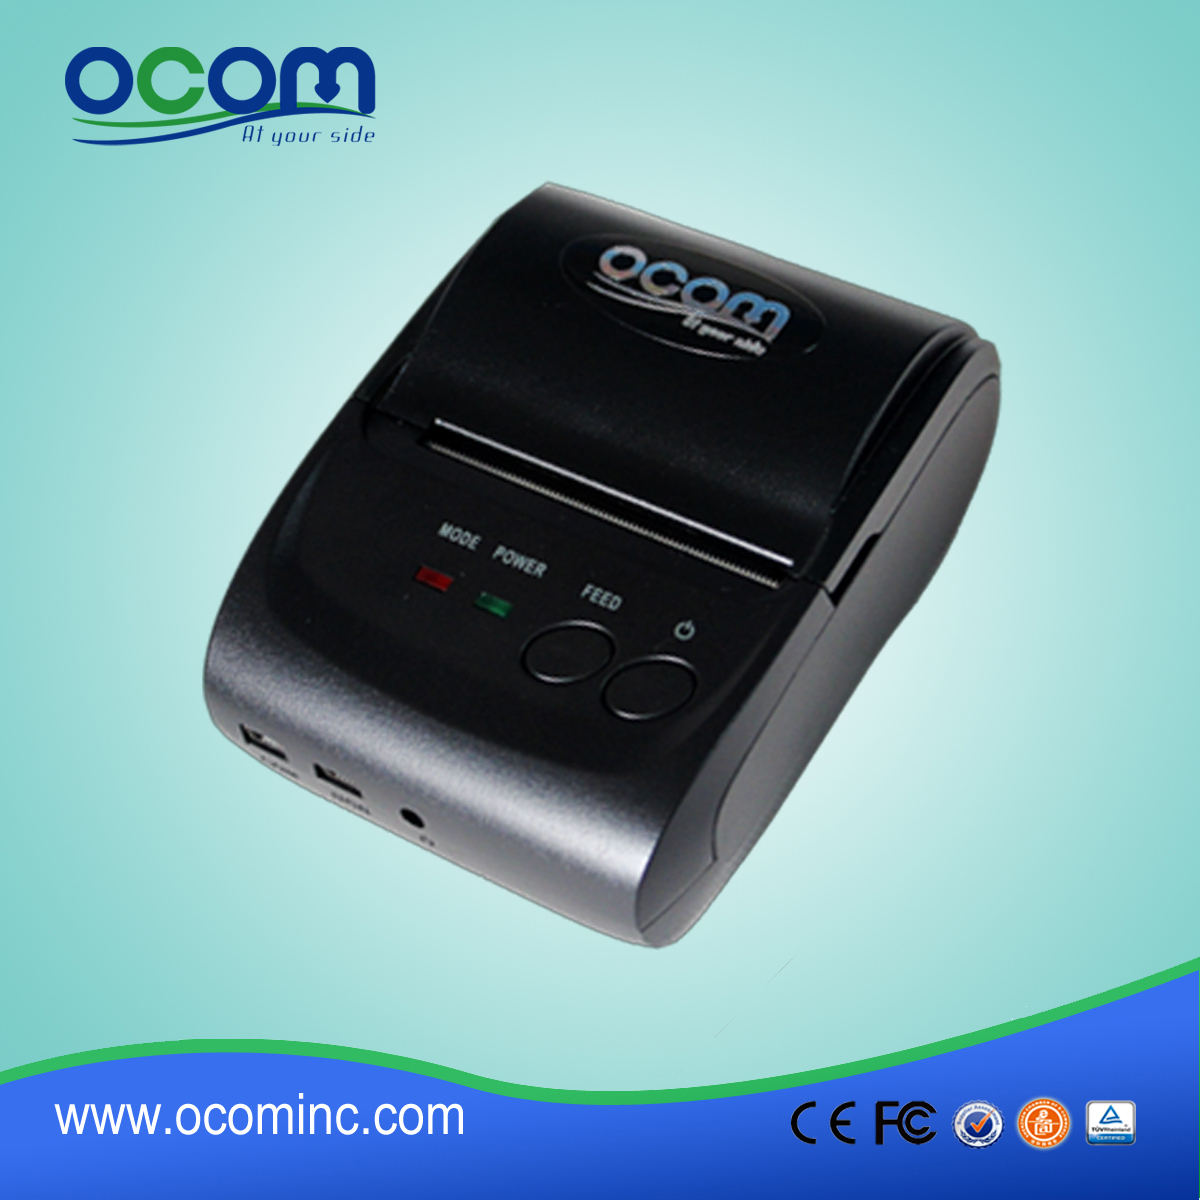 OCPP-M05: 2015 chaude mini-imprimante imprimante bluetooth pos, imprimante thermique sans fil